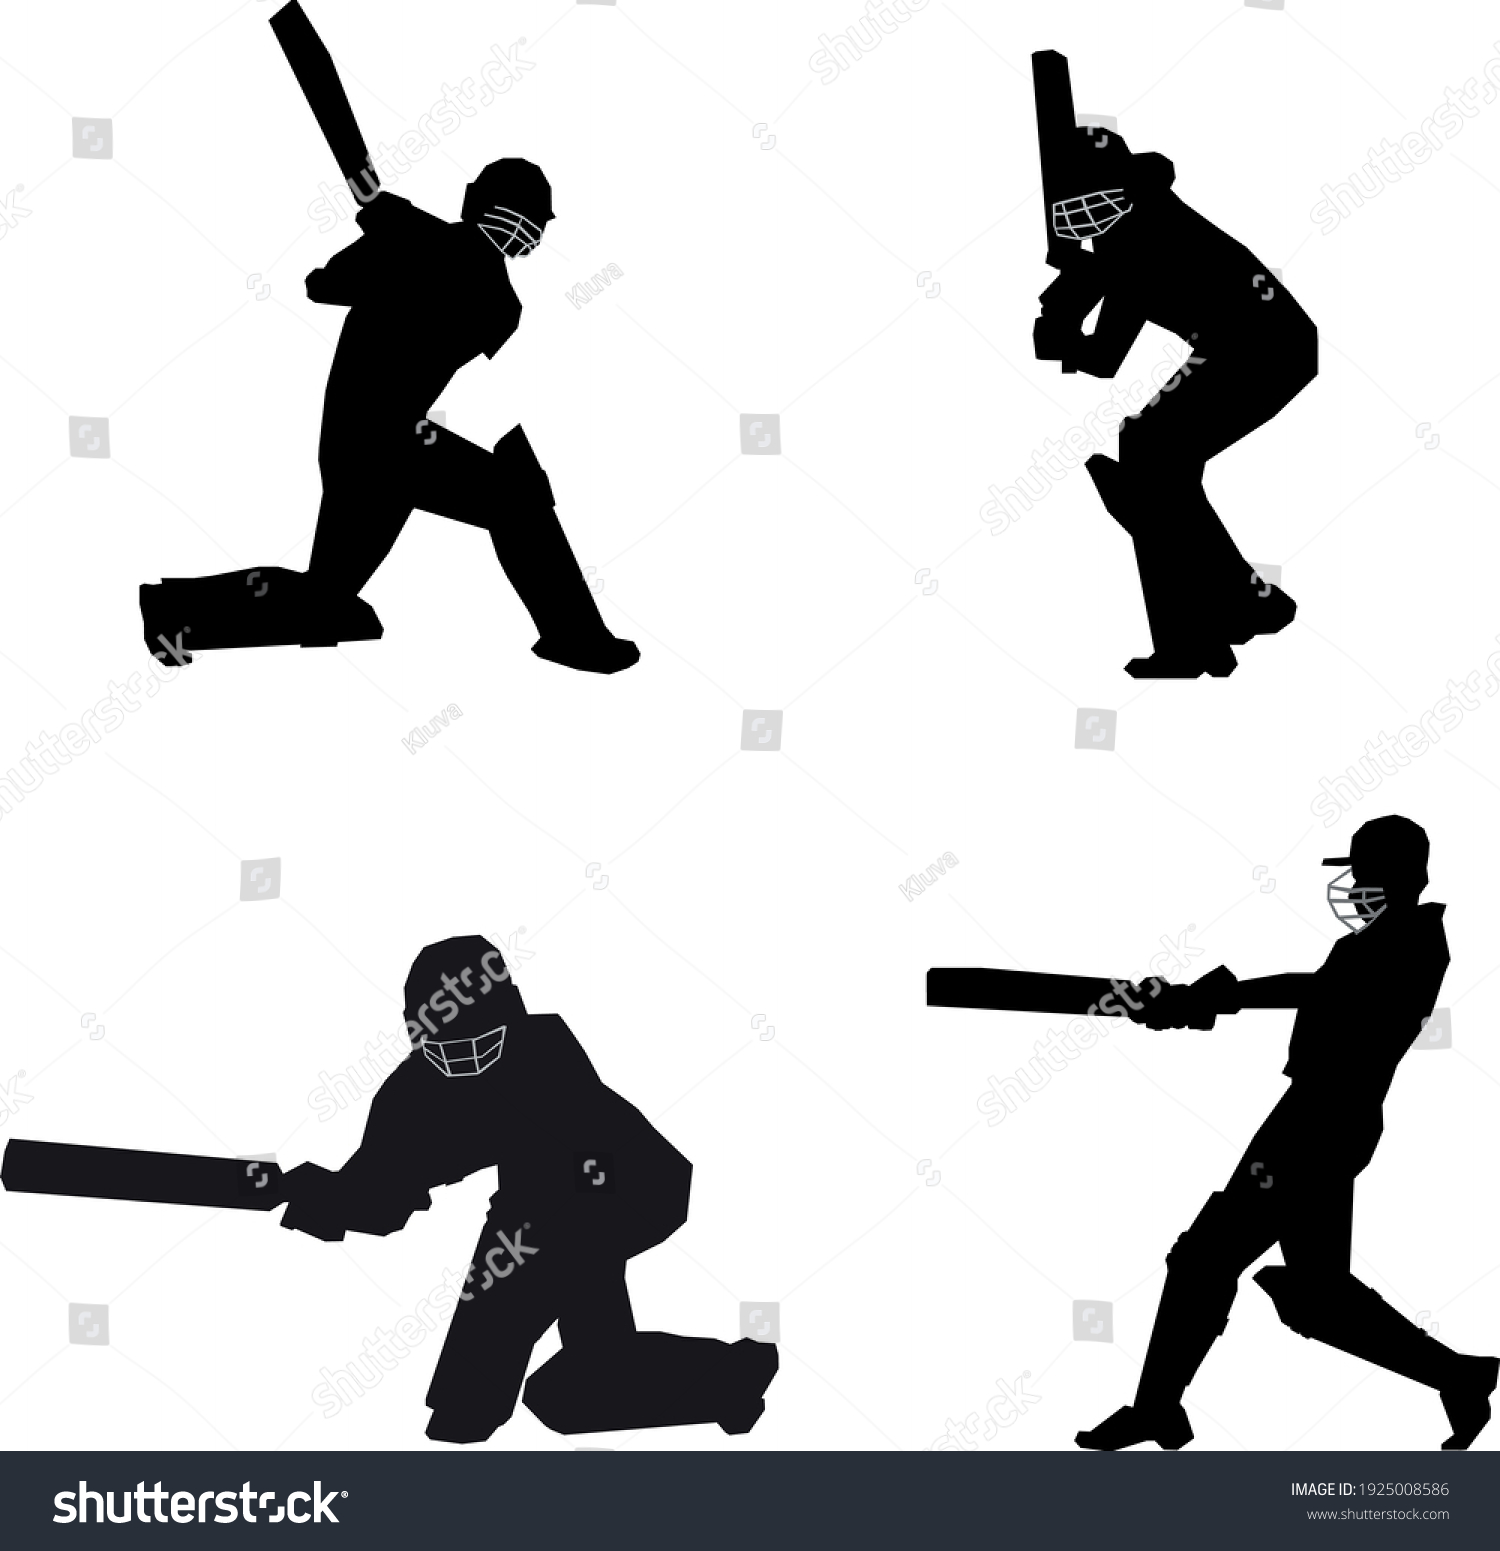 SVG of Cricket player batsman batting silhouettes collection set svg